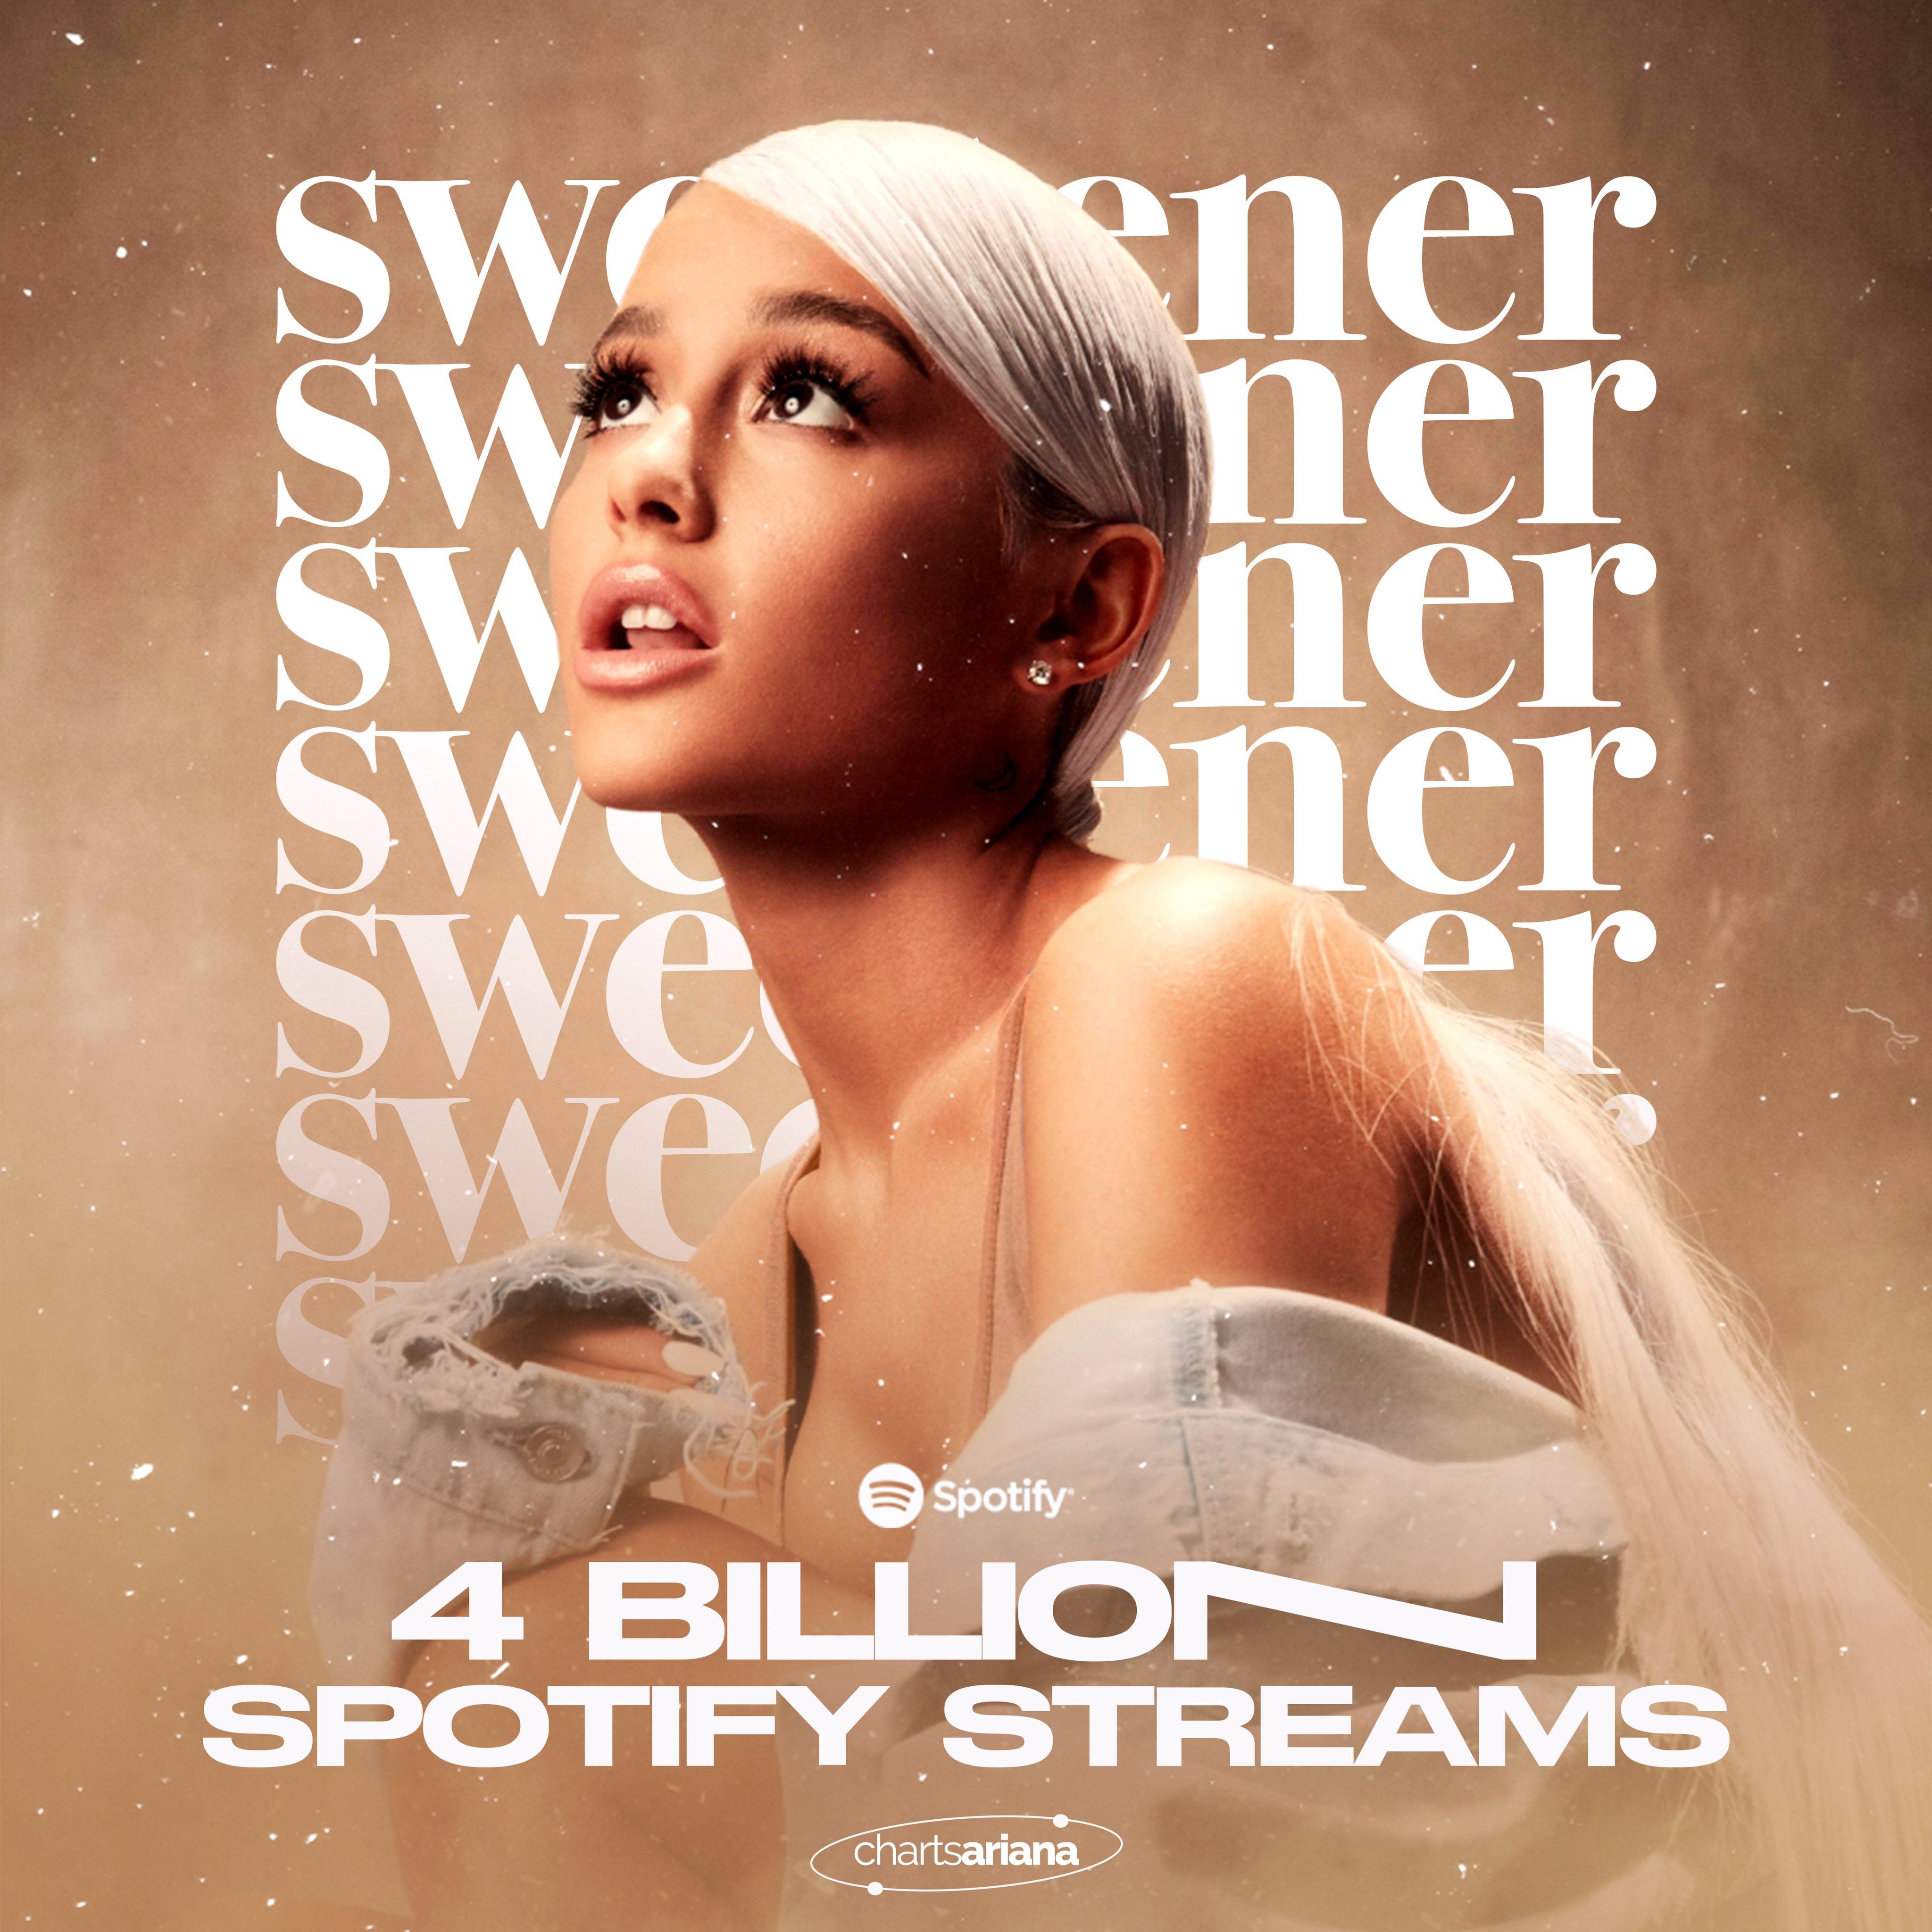 ariana grande专辑《sweetener》在spotify平台累计播放量突破40亿,这